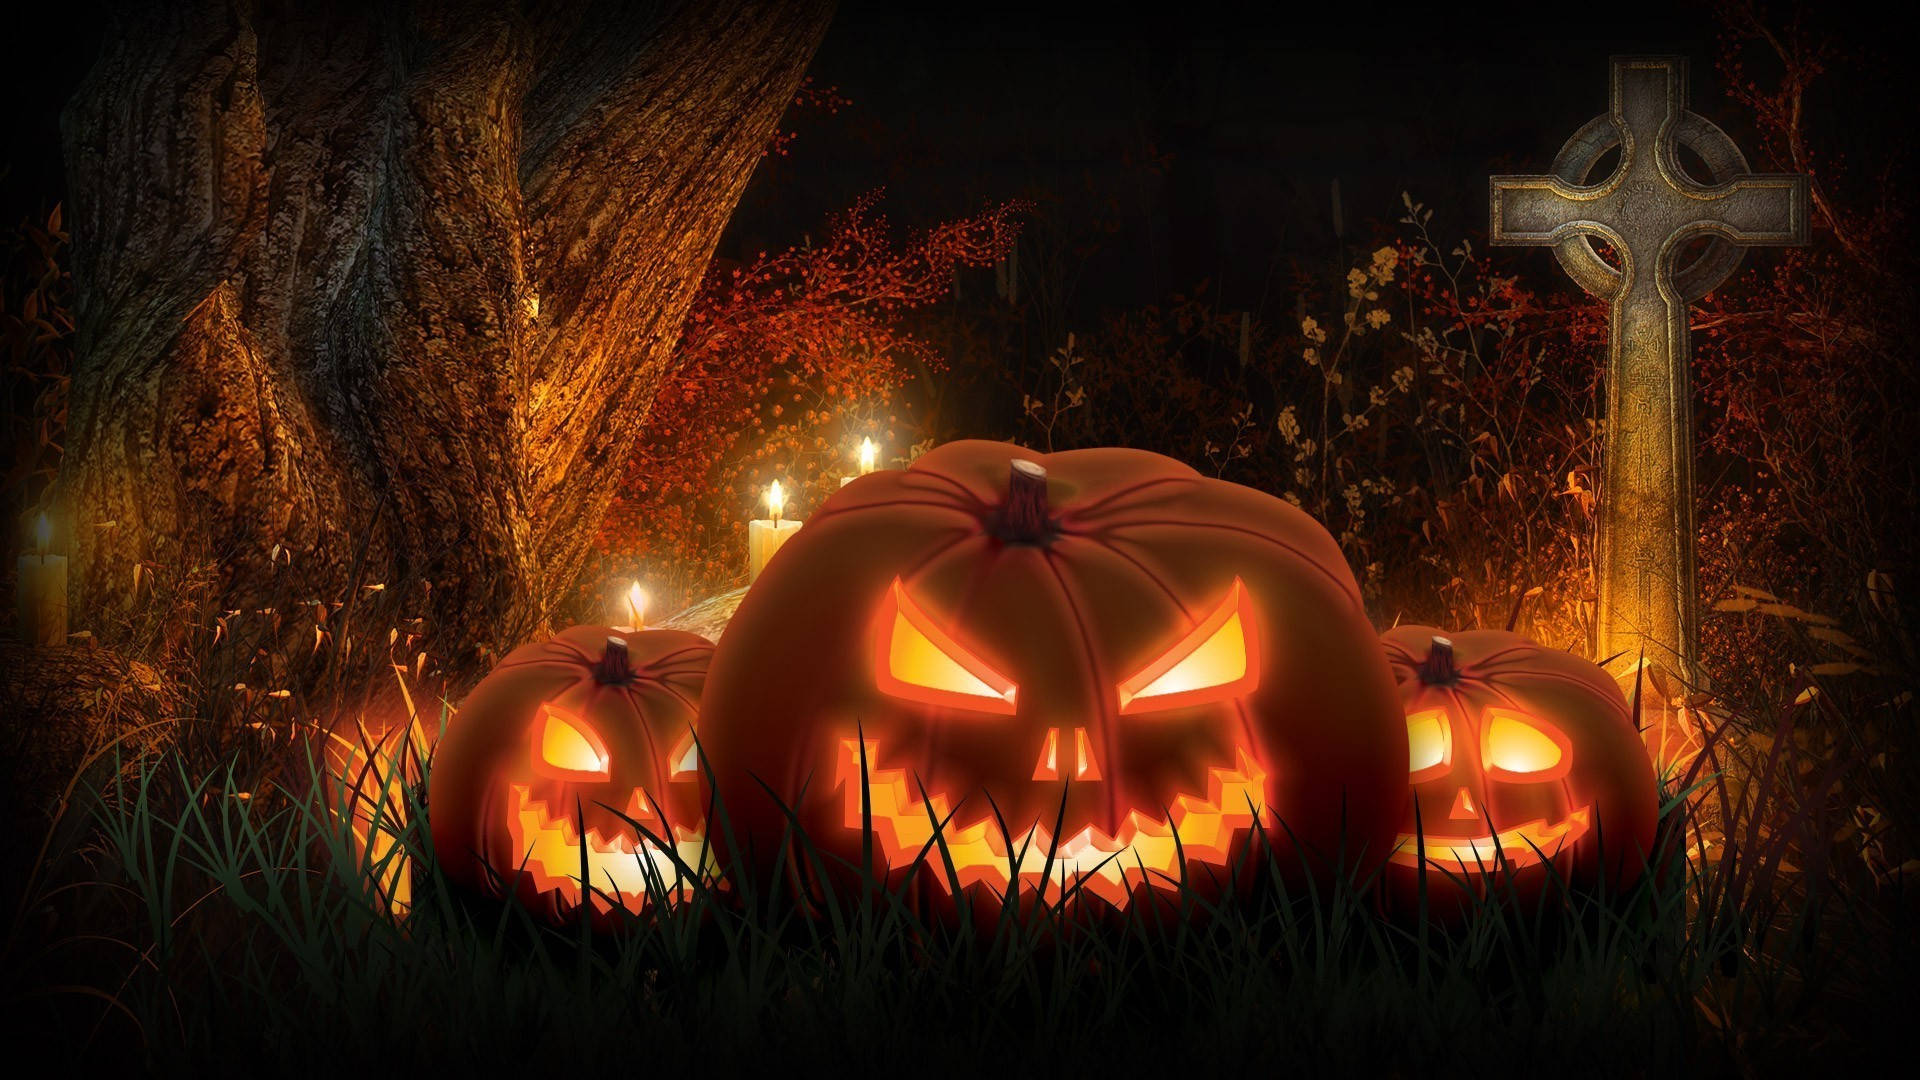 Spooky Halloween Ipad Screen Theme Picture